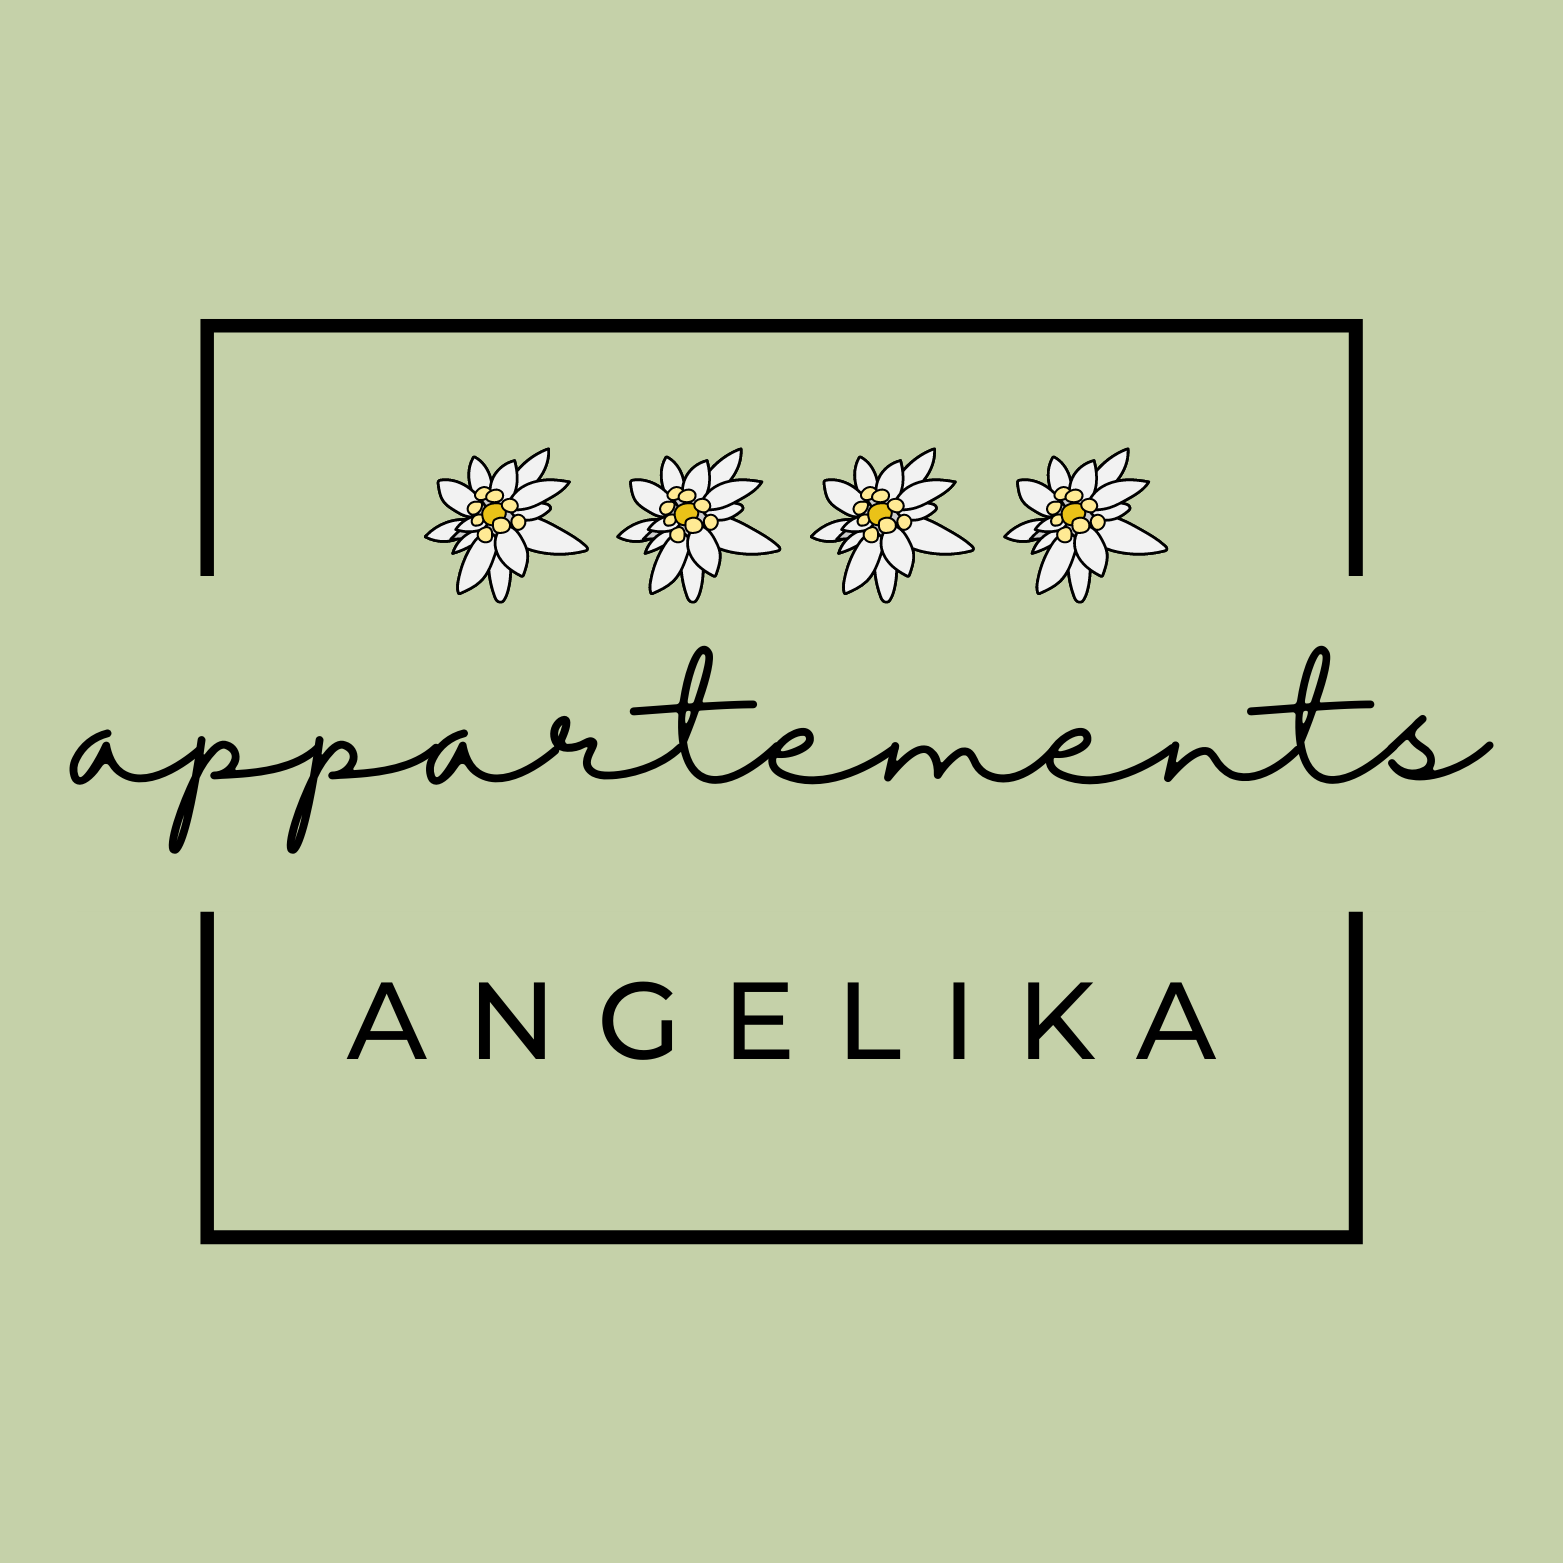  Appartements Angelika Bookings